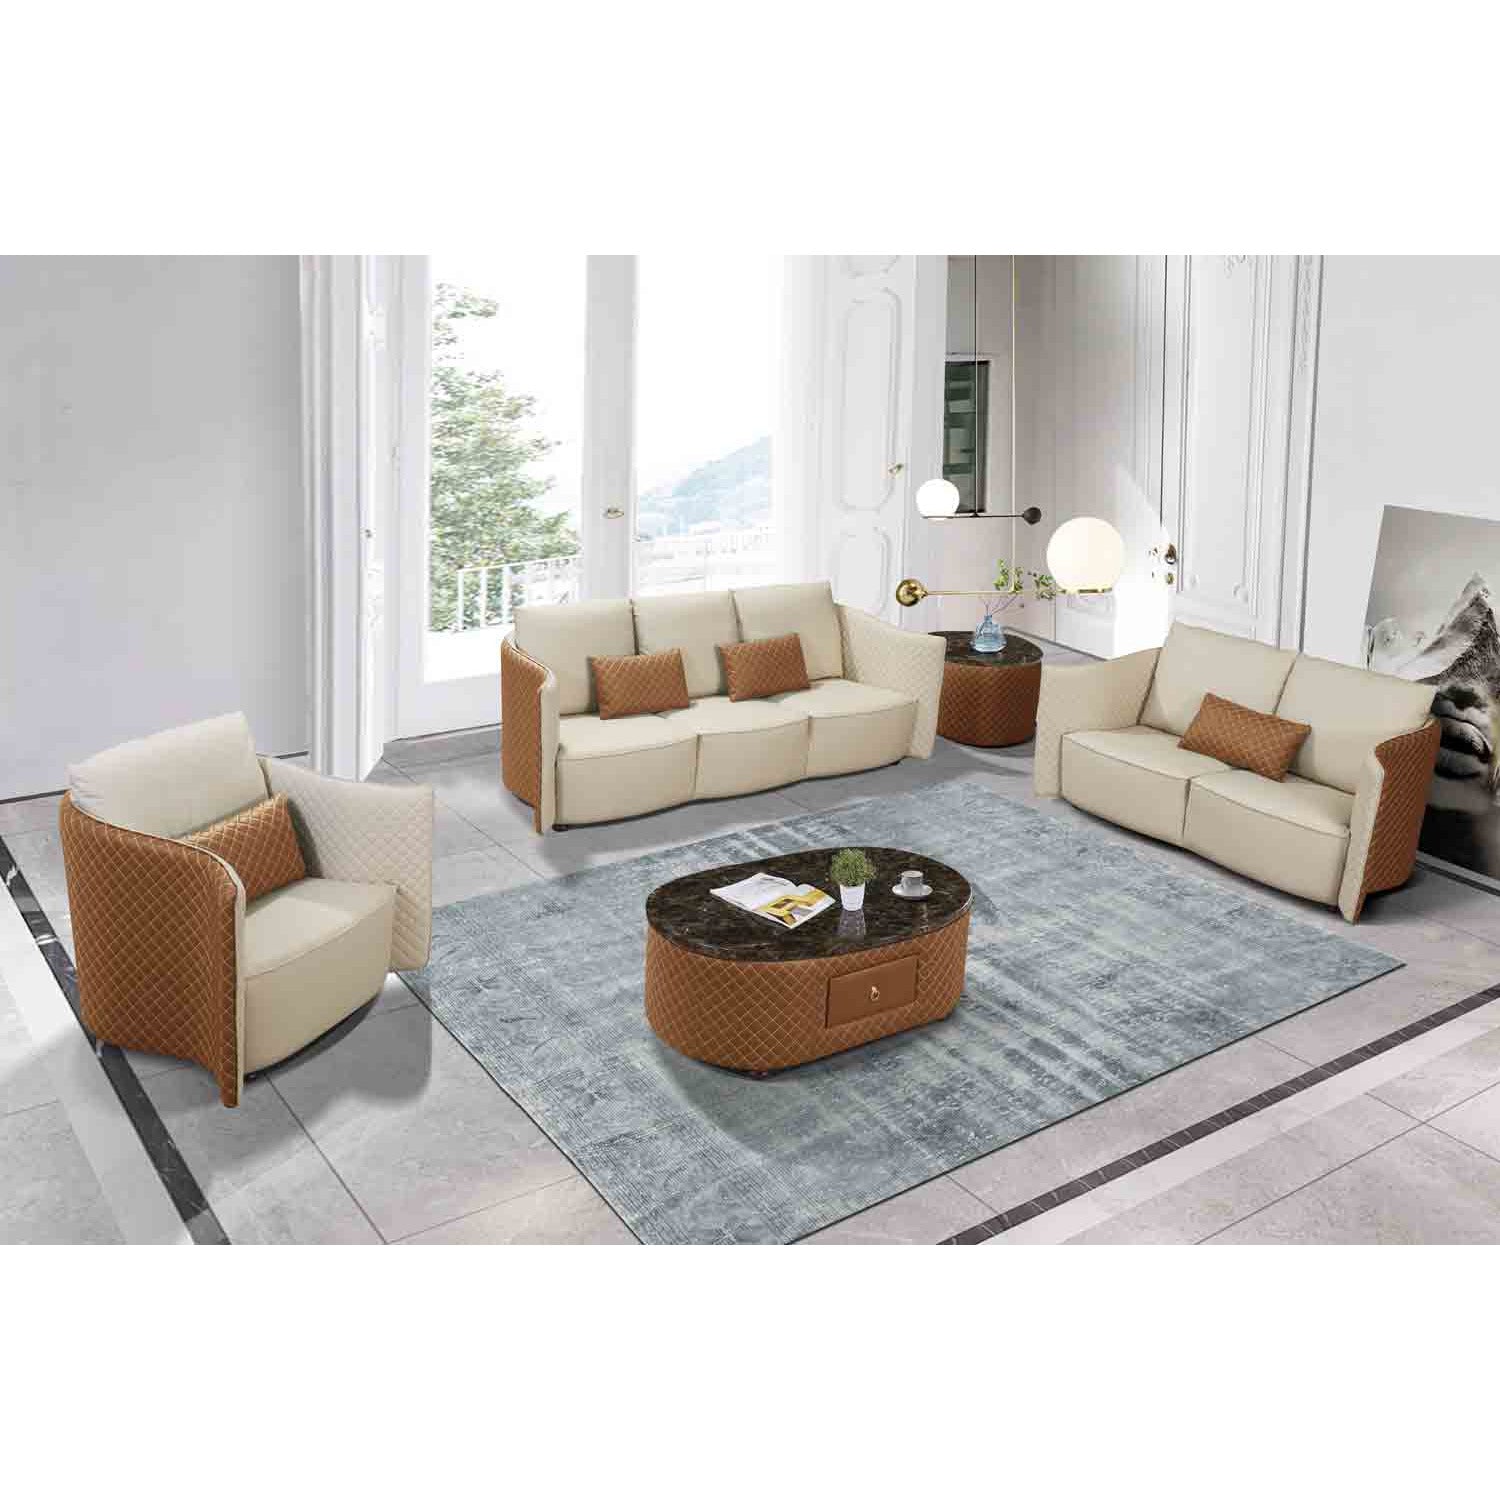 European Furniture - Makassar 3 Piece Living Room Set in Sand Beige & Orange - 52552-3SET - New Star Living